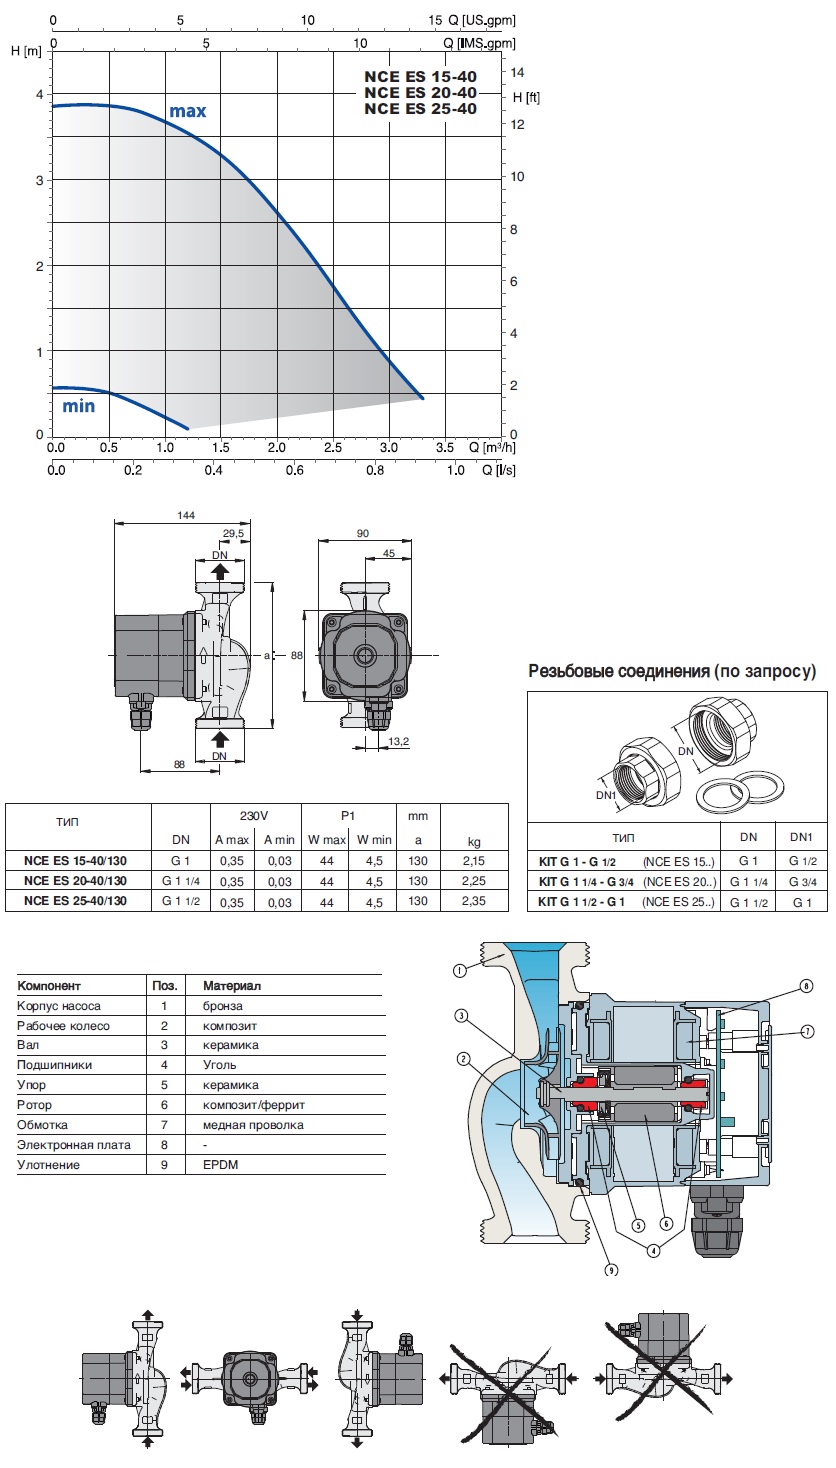 NCE EI - NCES Inverter circulation pumps